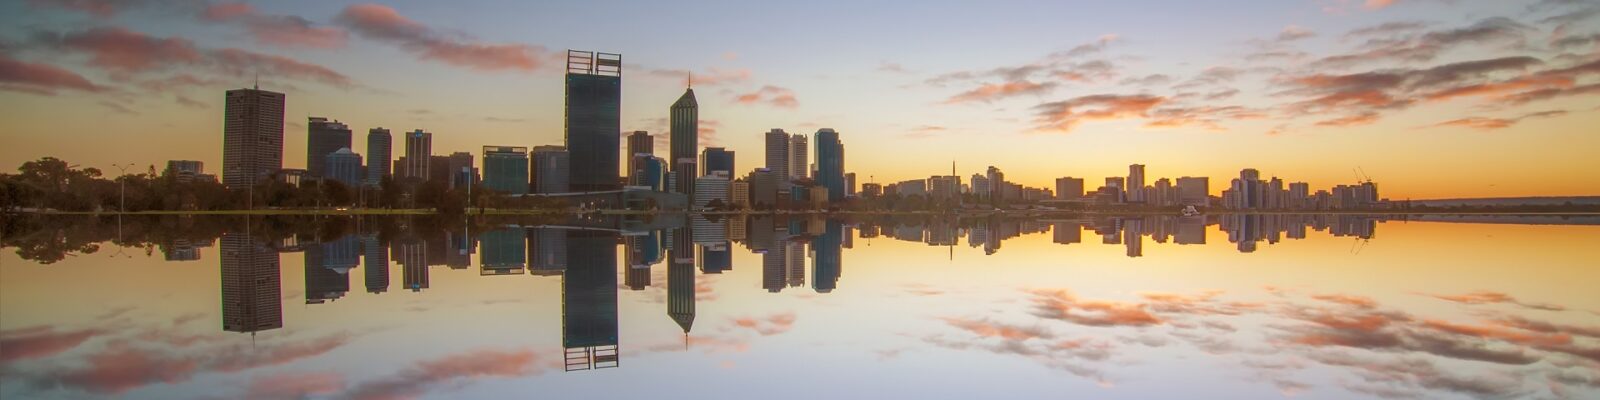 Perth Skyline Banner2